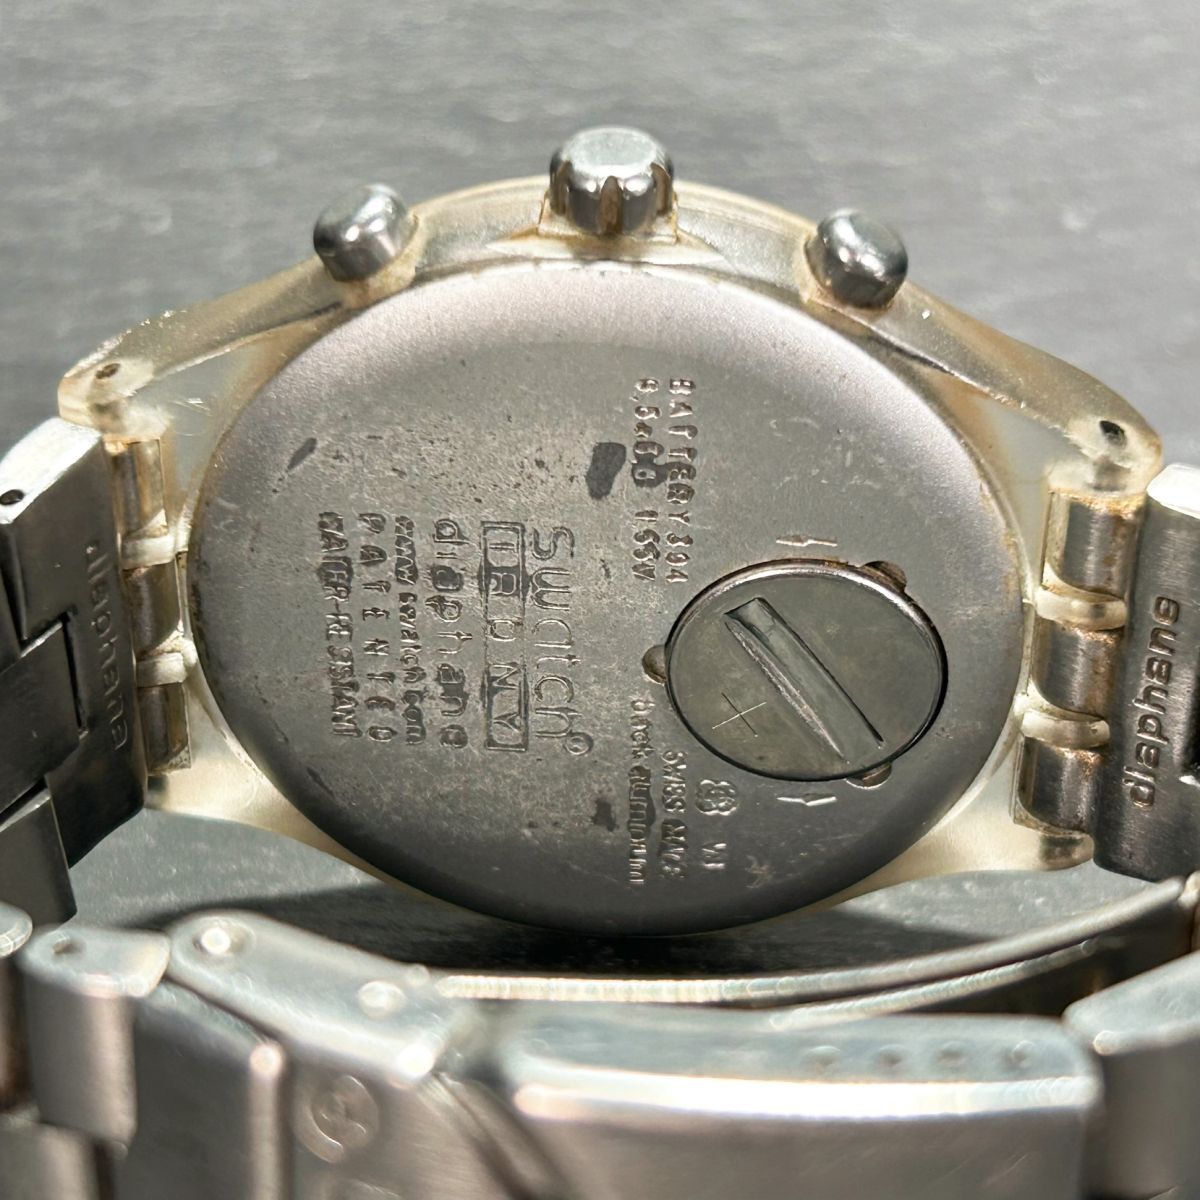 SWATCH Swatch IRONY Irony CHRONO Chrono AG2001 наручные часы кварц аналог хронограф календарь мужской новый товар батарейка заменена 